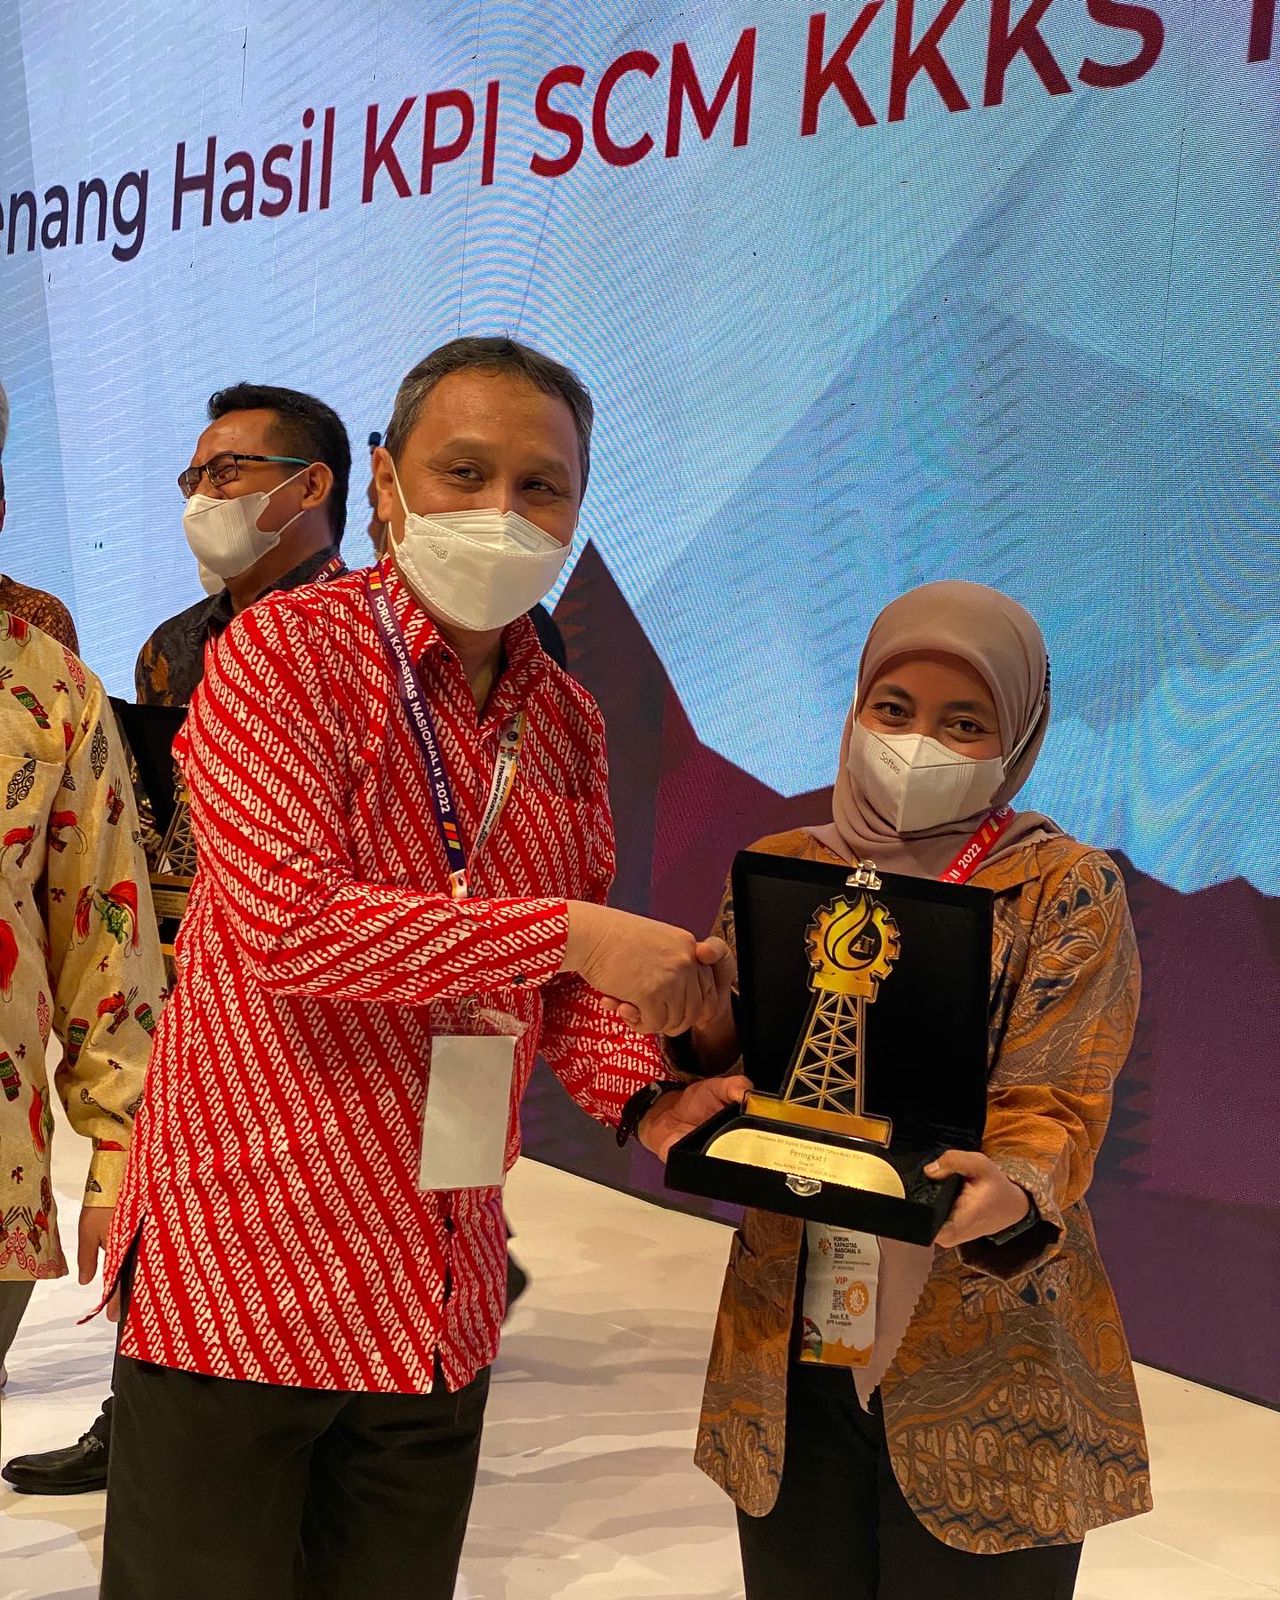 SCM Manager PT SPR Langgak, Susi K Ria (kanan) menerima penghargaan yang diberikan oleh Plt. Deputi Pengendalian Pengadaan SKK Migas, Rudi Satwiko (kiri) sebagai peringkat 1 pemegang hasil KPI SCM KKKS tahun buku 2021 dengan WP&B kurang dari US$ 25 j